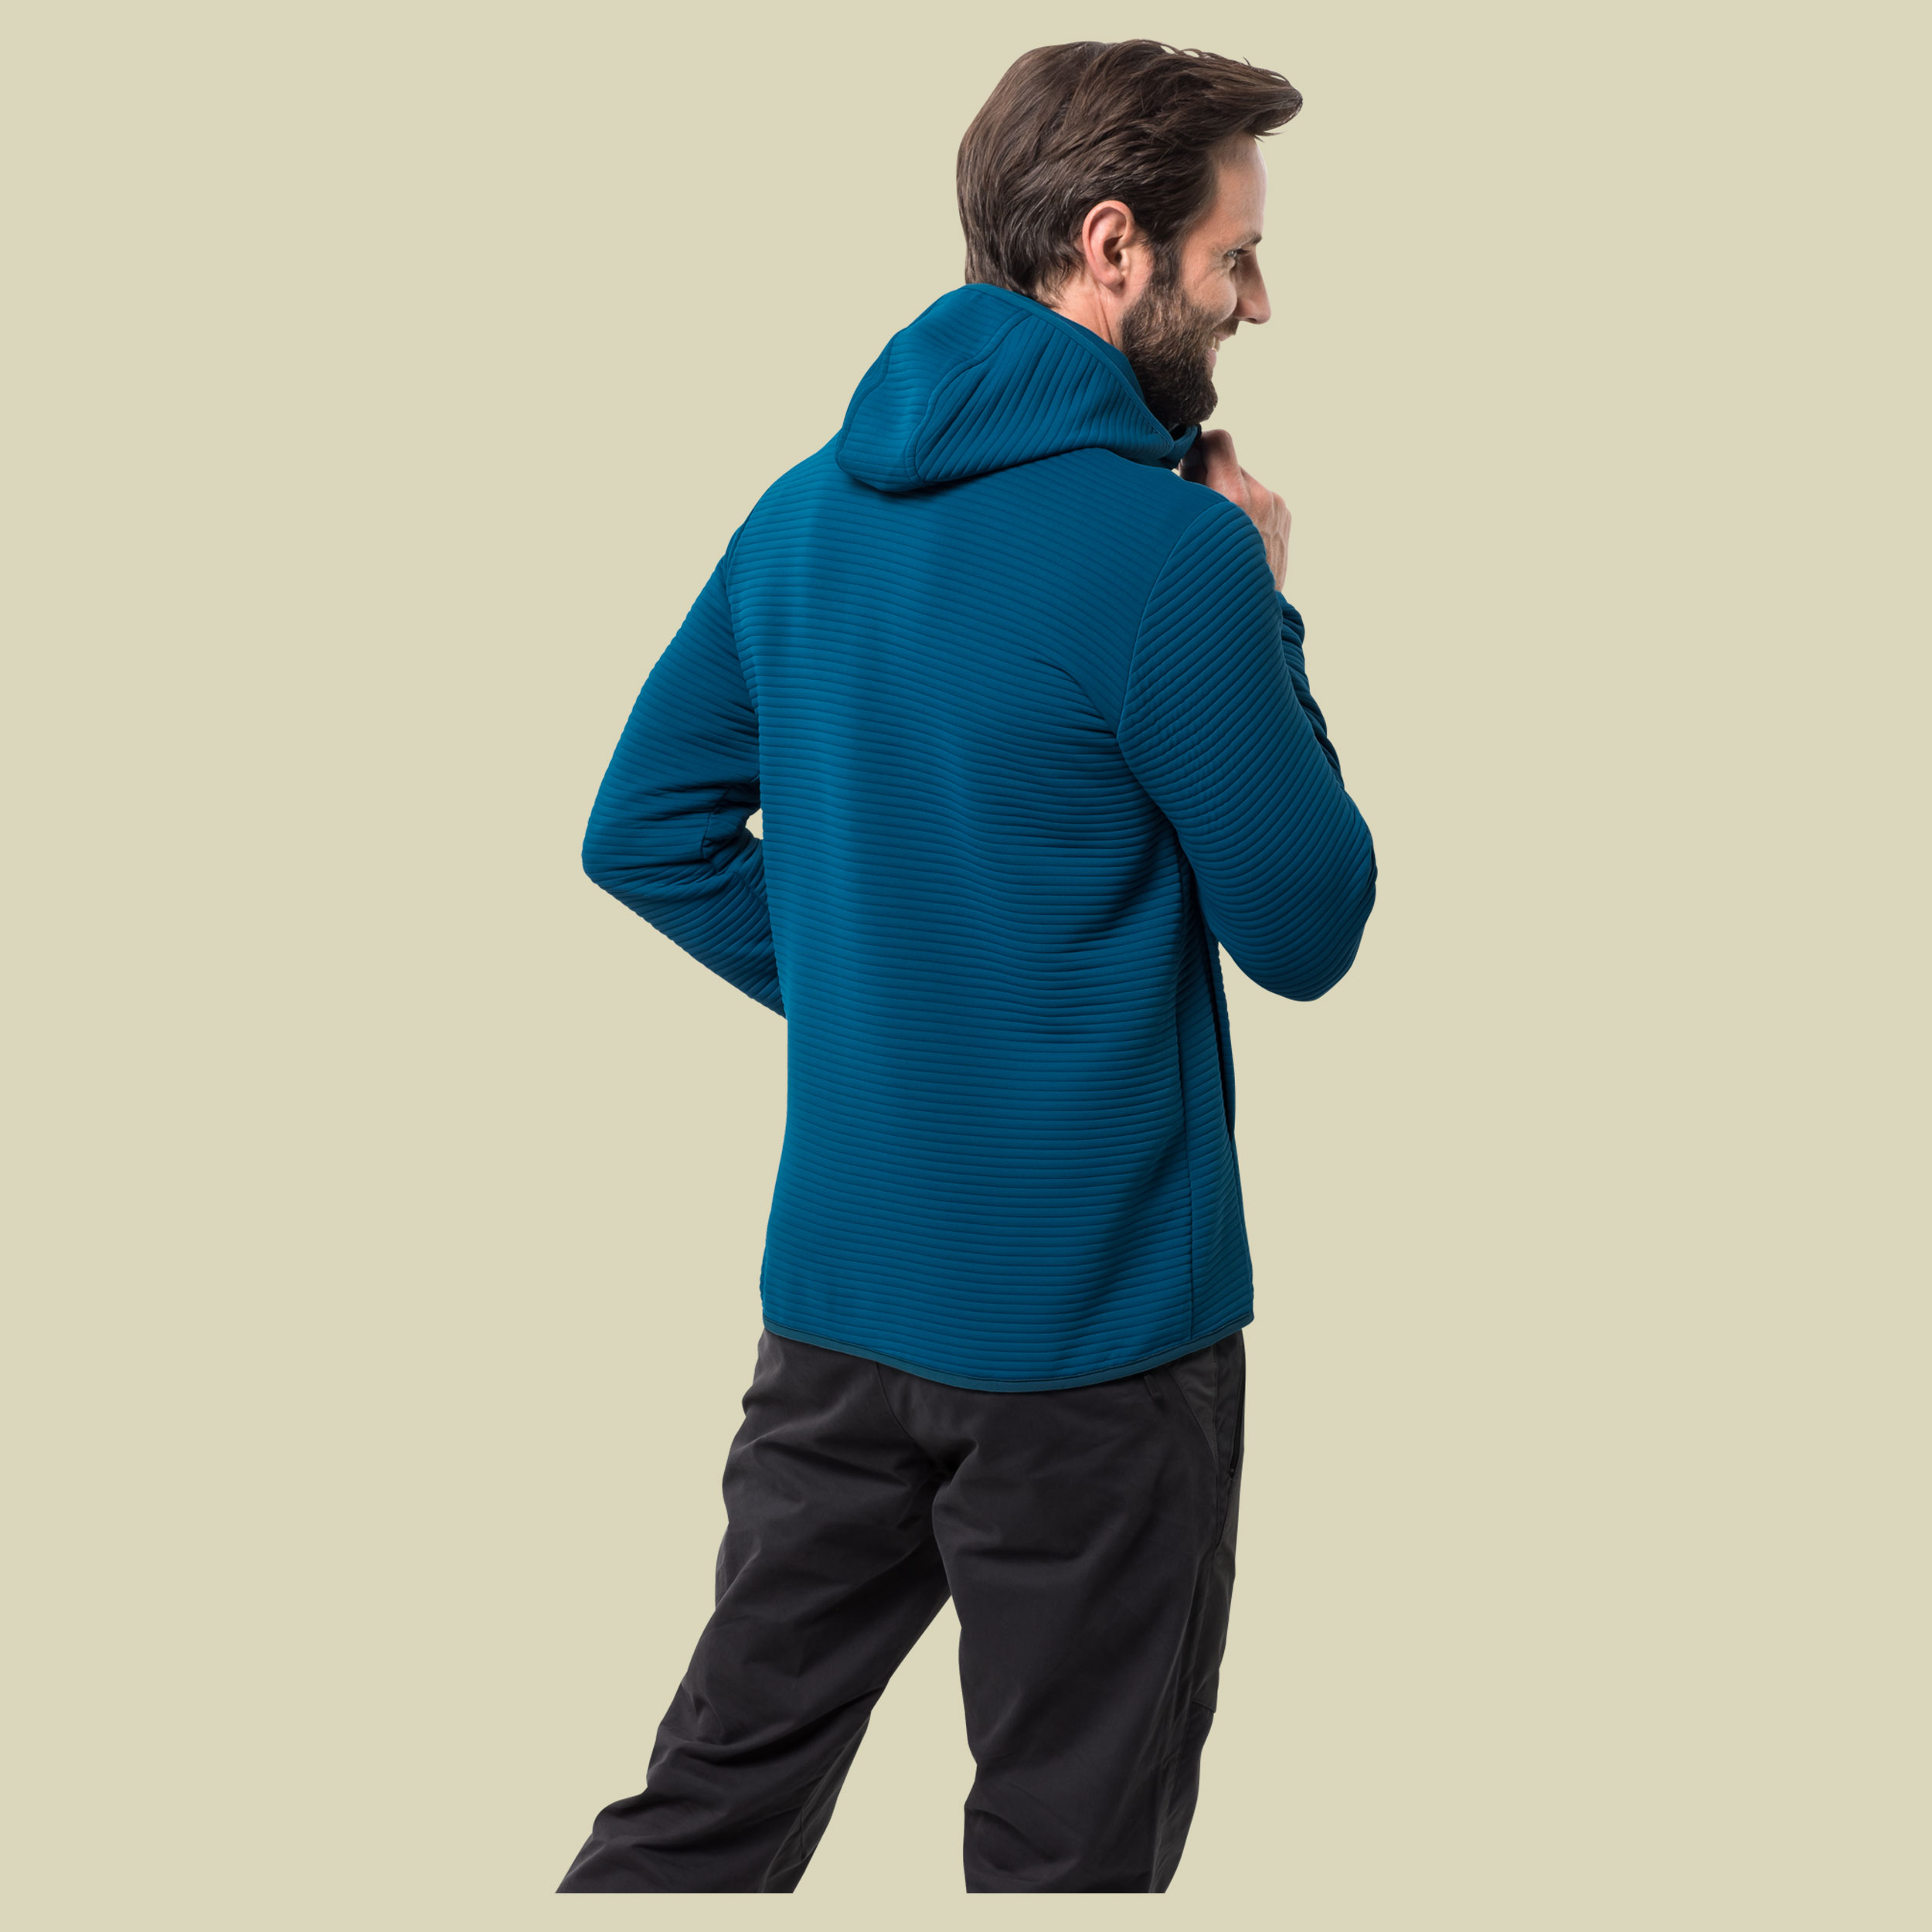 Modesto Hooded Jacket Men Größe M Farbe glacier blue